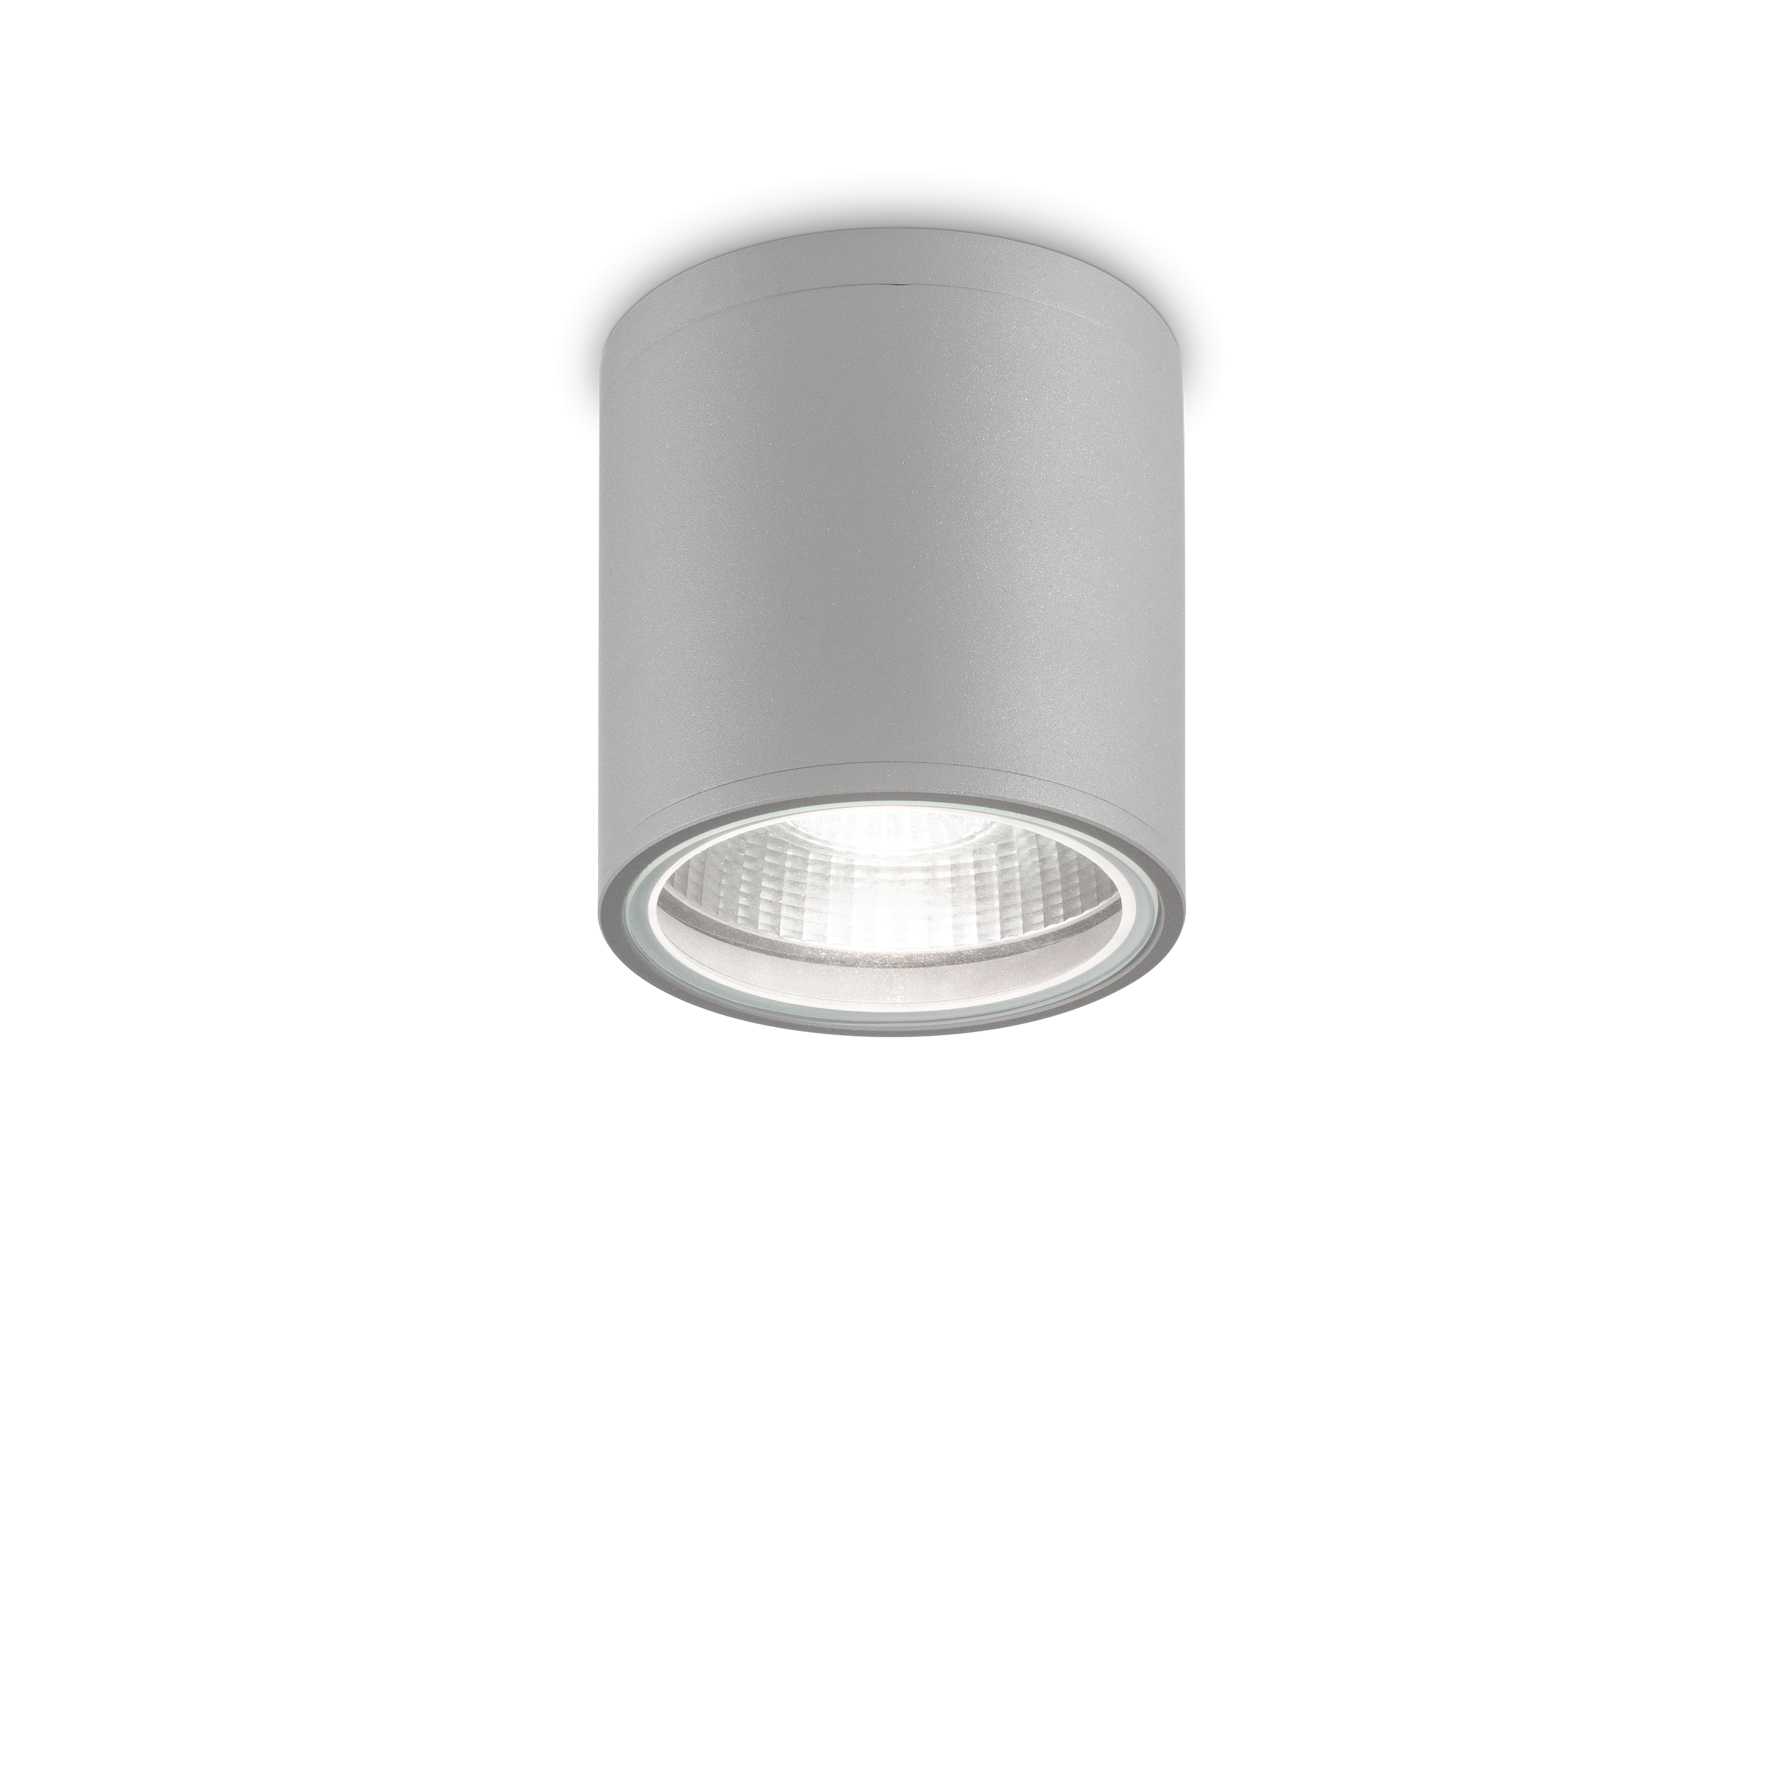 AD hotelska oprema Vanjka stropna lampa Gun pl1- Sive boje slika proizvoda